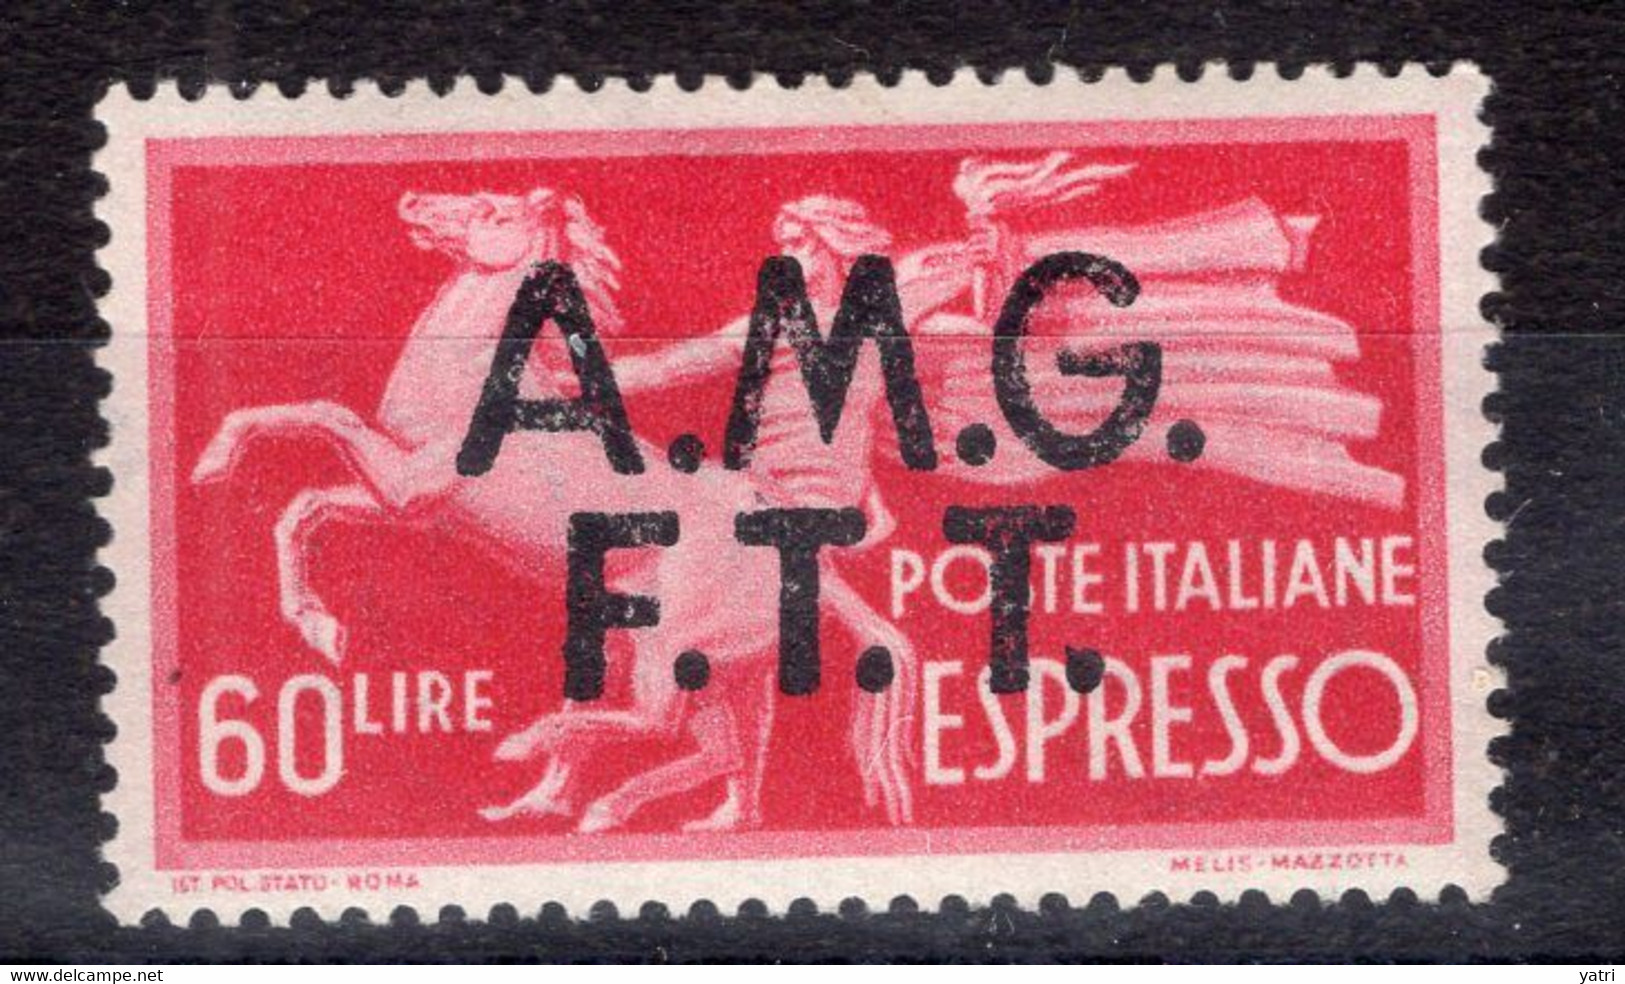 Trieste - Zona A (1948) - Espresso 60 Lire * MH - Express Mail